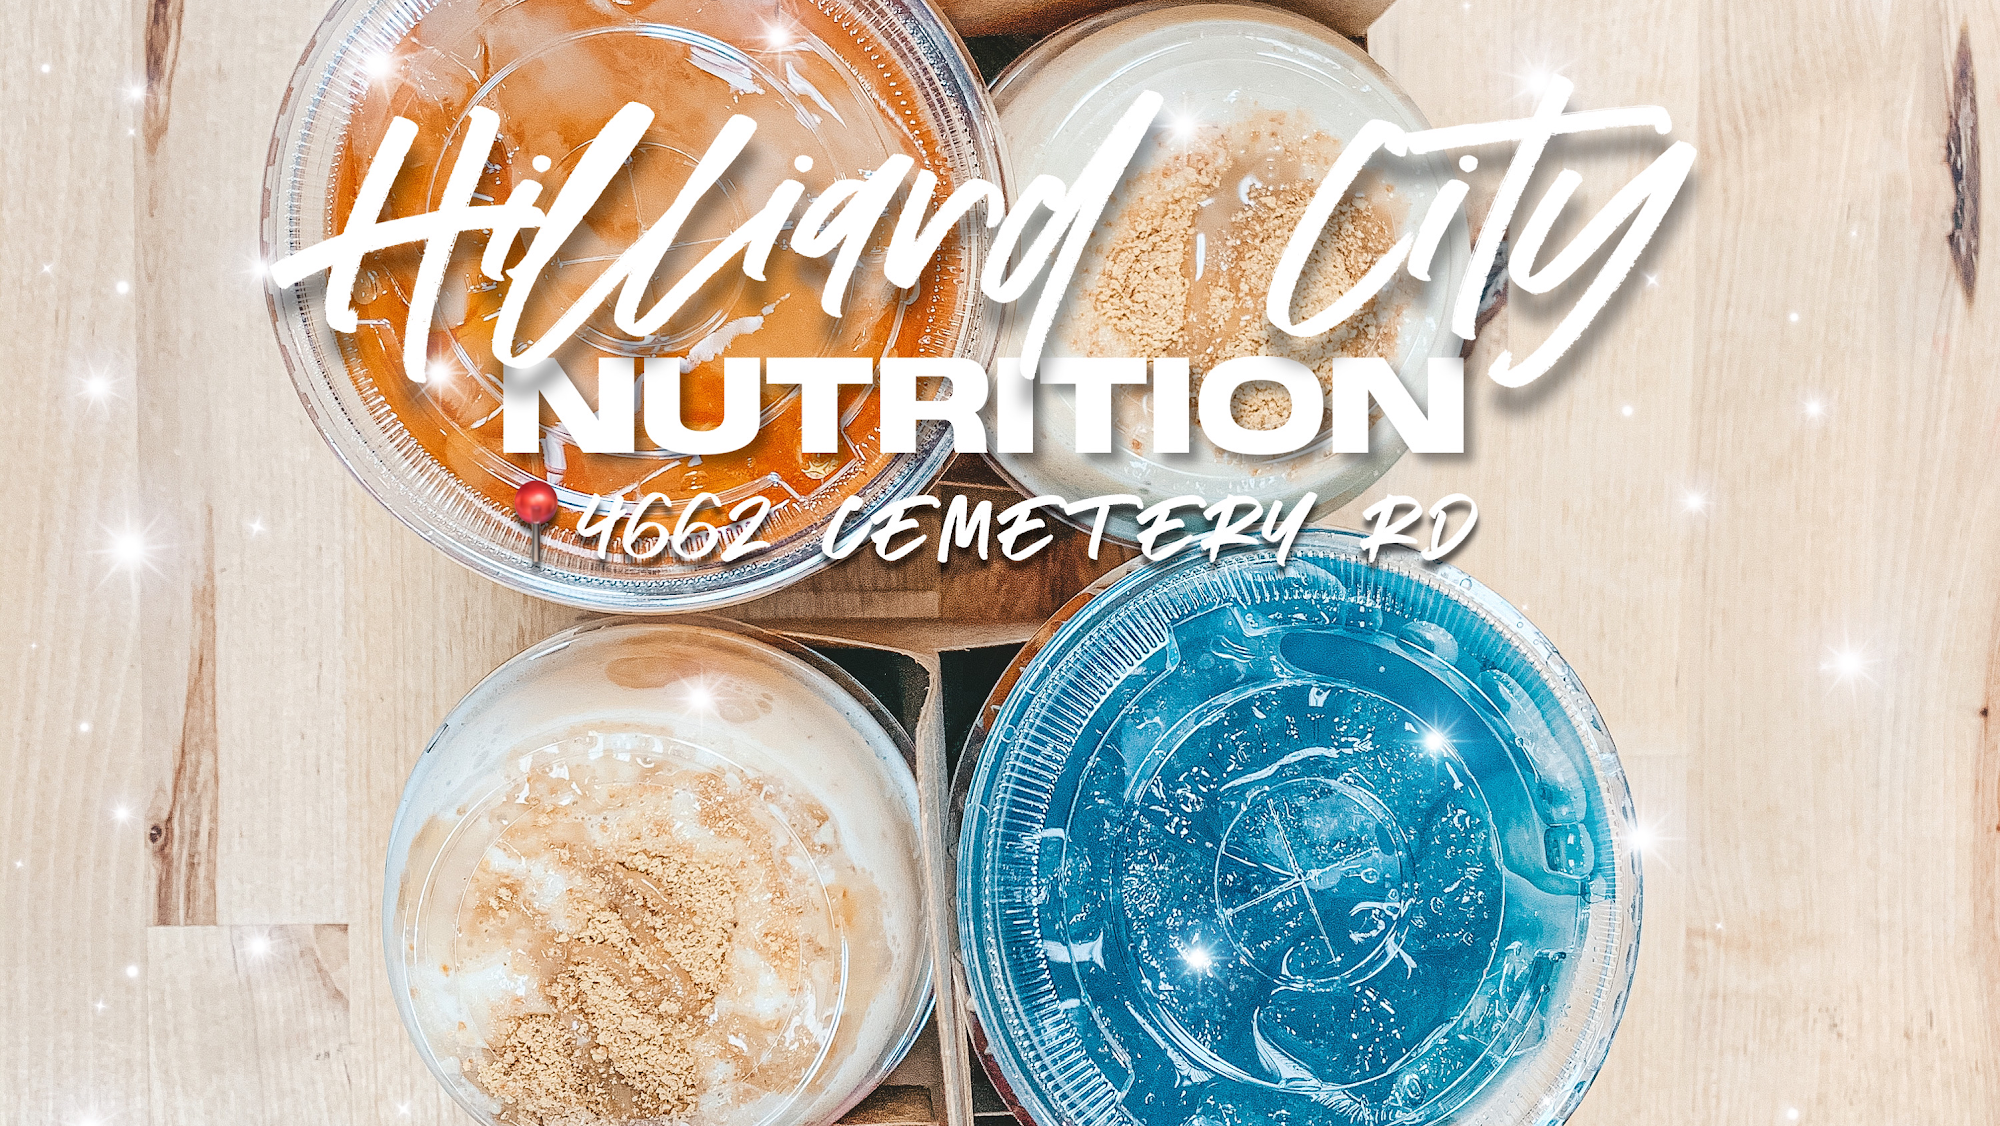 Hilliard City Nutrition